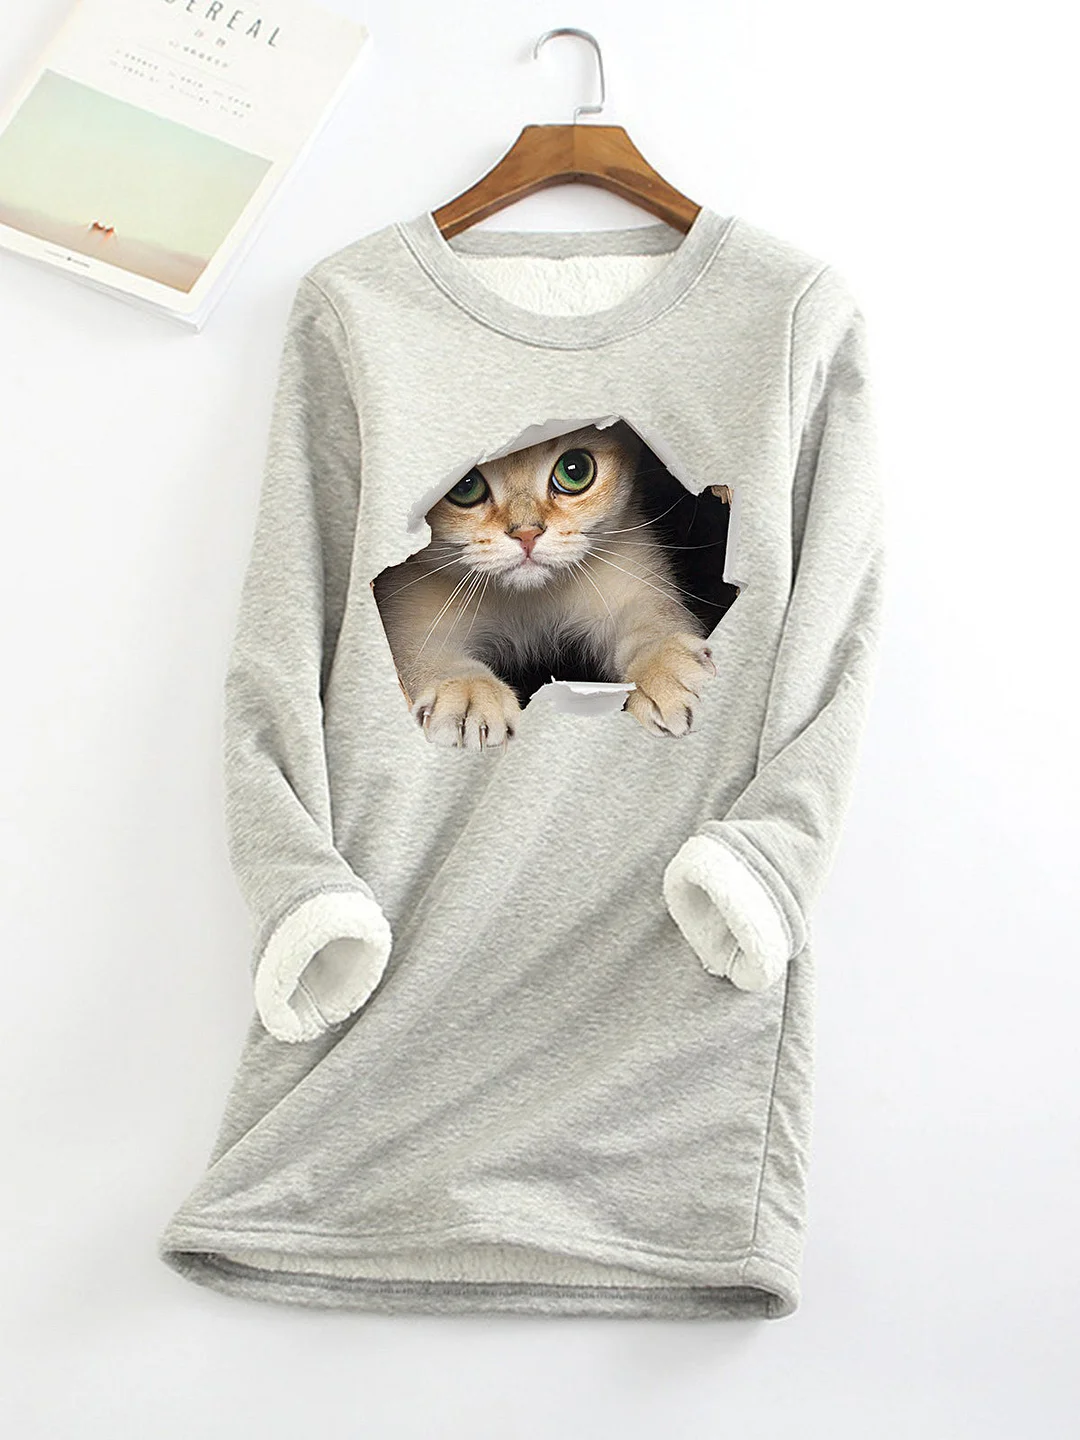 Casual Crew Neck Fluff/Granular fleece fabric Loose H-line Cat Sweatshirt Tops